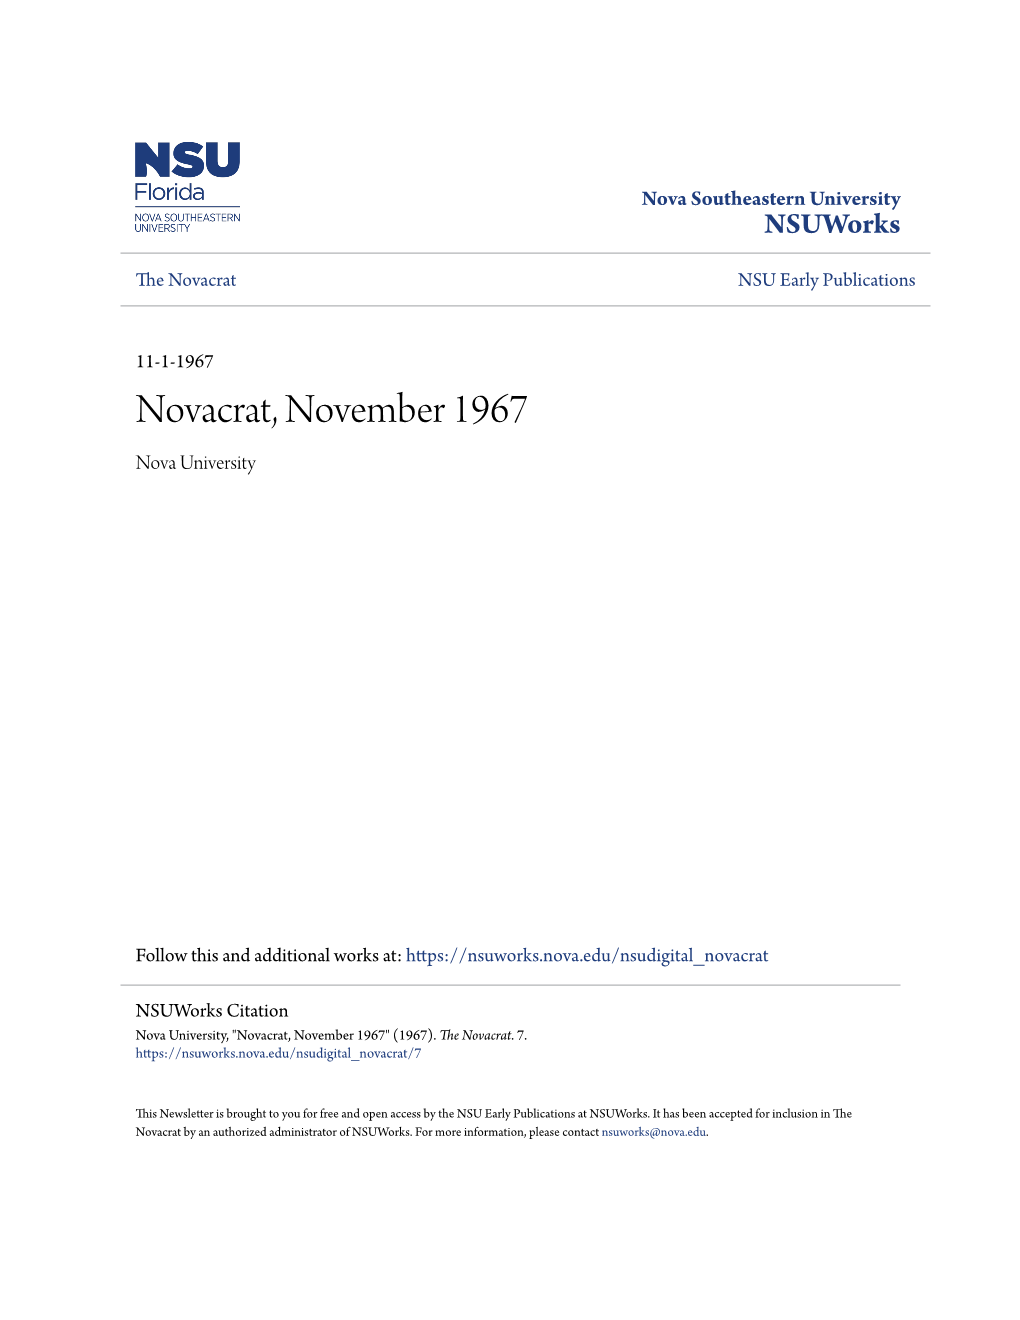 Novacrat, November 1967 Nova University